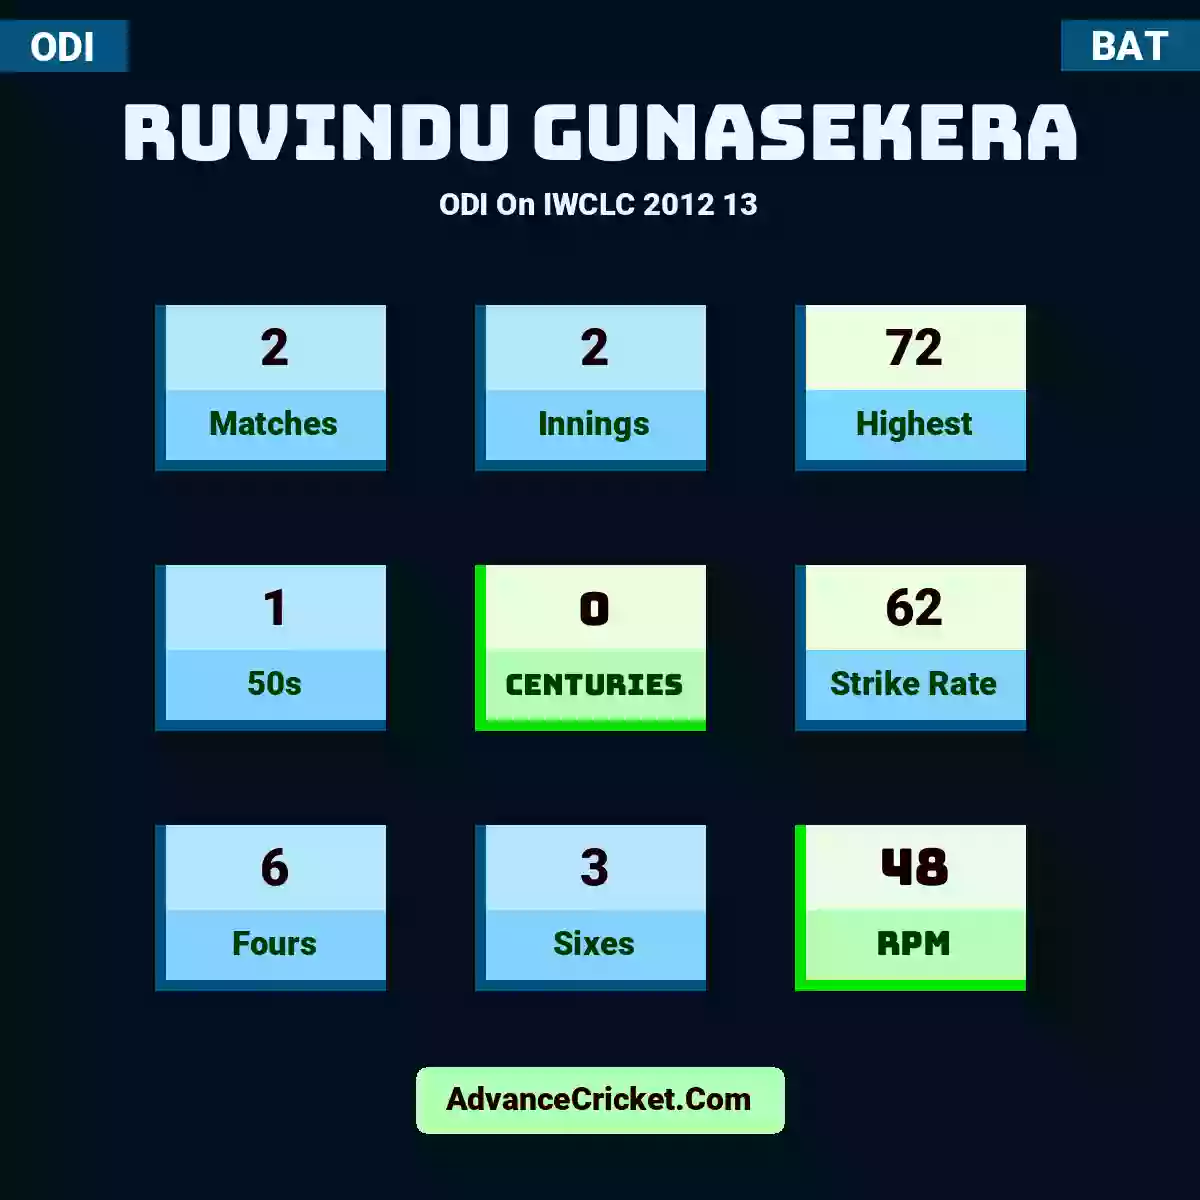 Ruvindu Gunasekera ODI  On IWCLC 2012 13, Ruvindu Gunasekera played 2 matches, scored 72 runs as highest, 1 half-centuries, and 0 centuries, with a strike rate of 62. R.Gunasekera hit 6 fours and 3 sixes, with an RPM of 48.